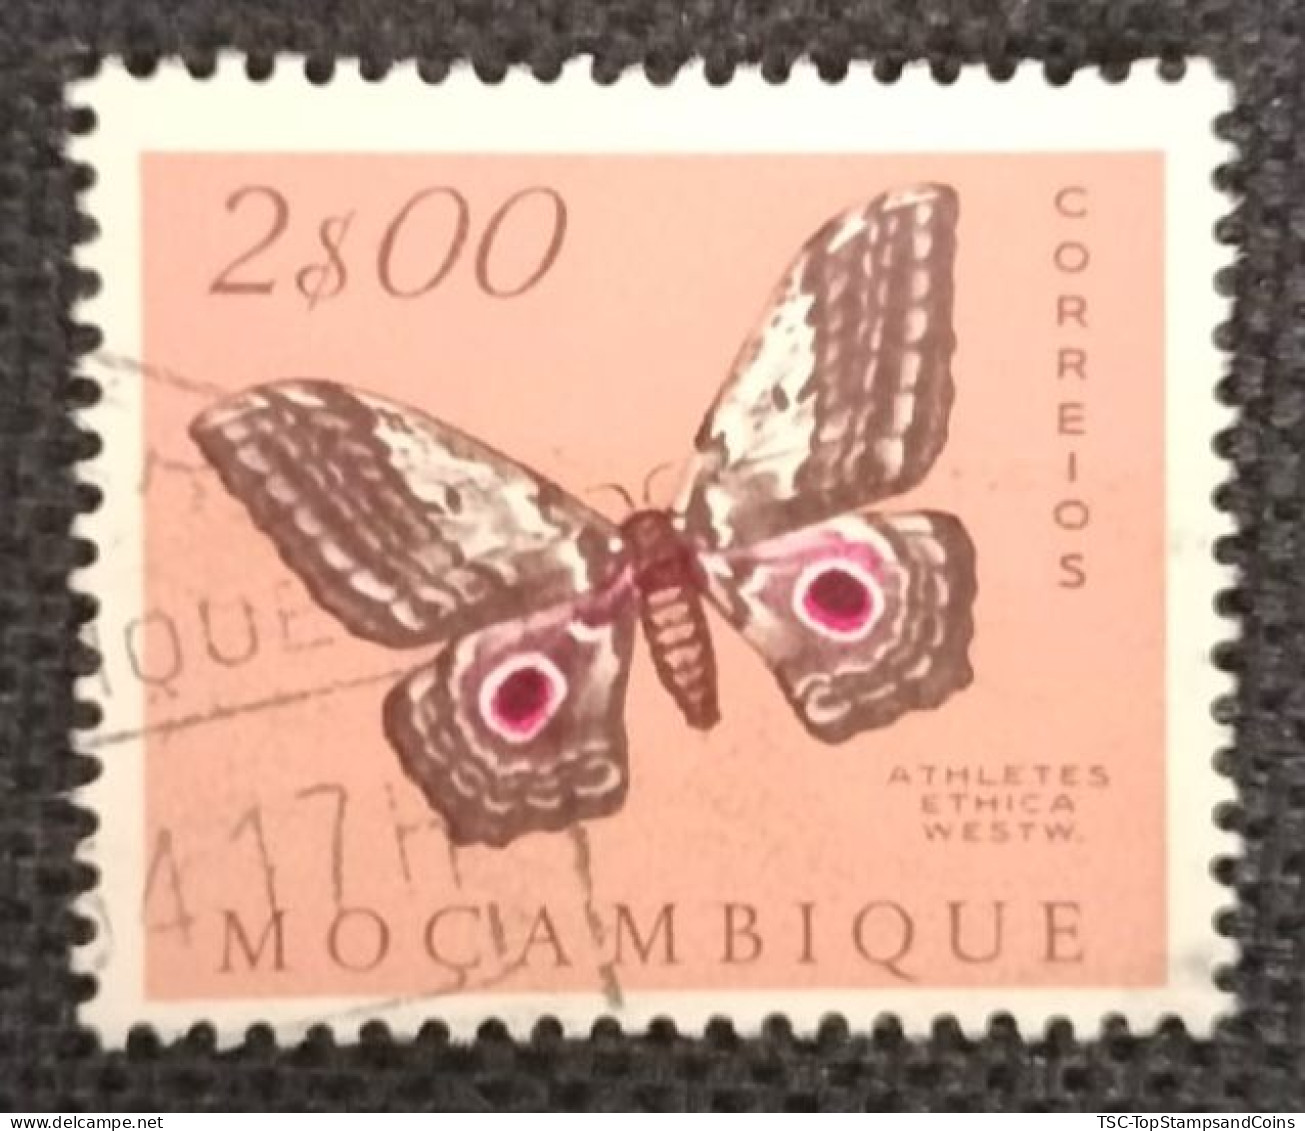 MOZPO0397U7 - Mozambique Butterflies  - 2$00 Used Stamp - Mozambique - 1953 - Mozambique